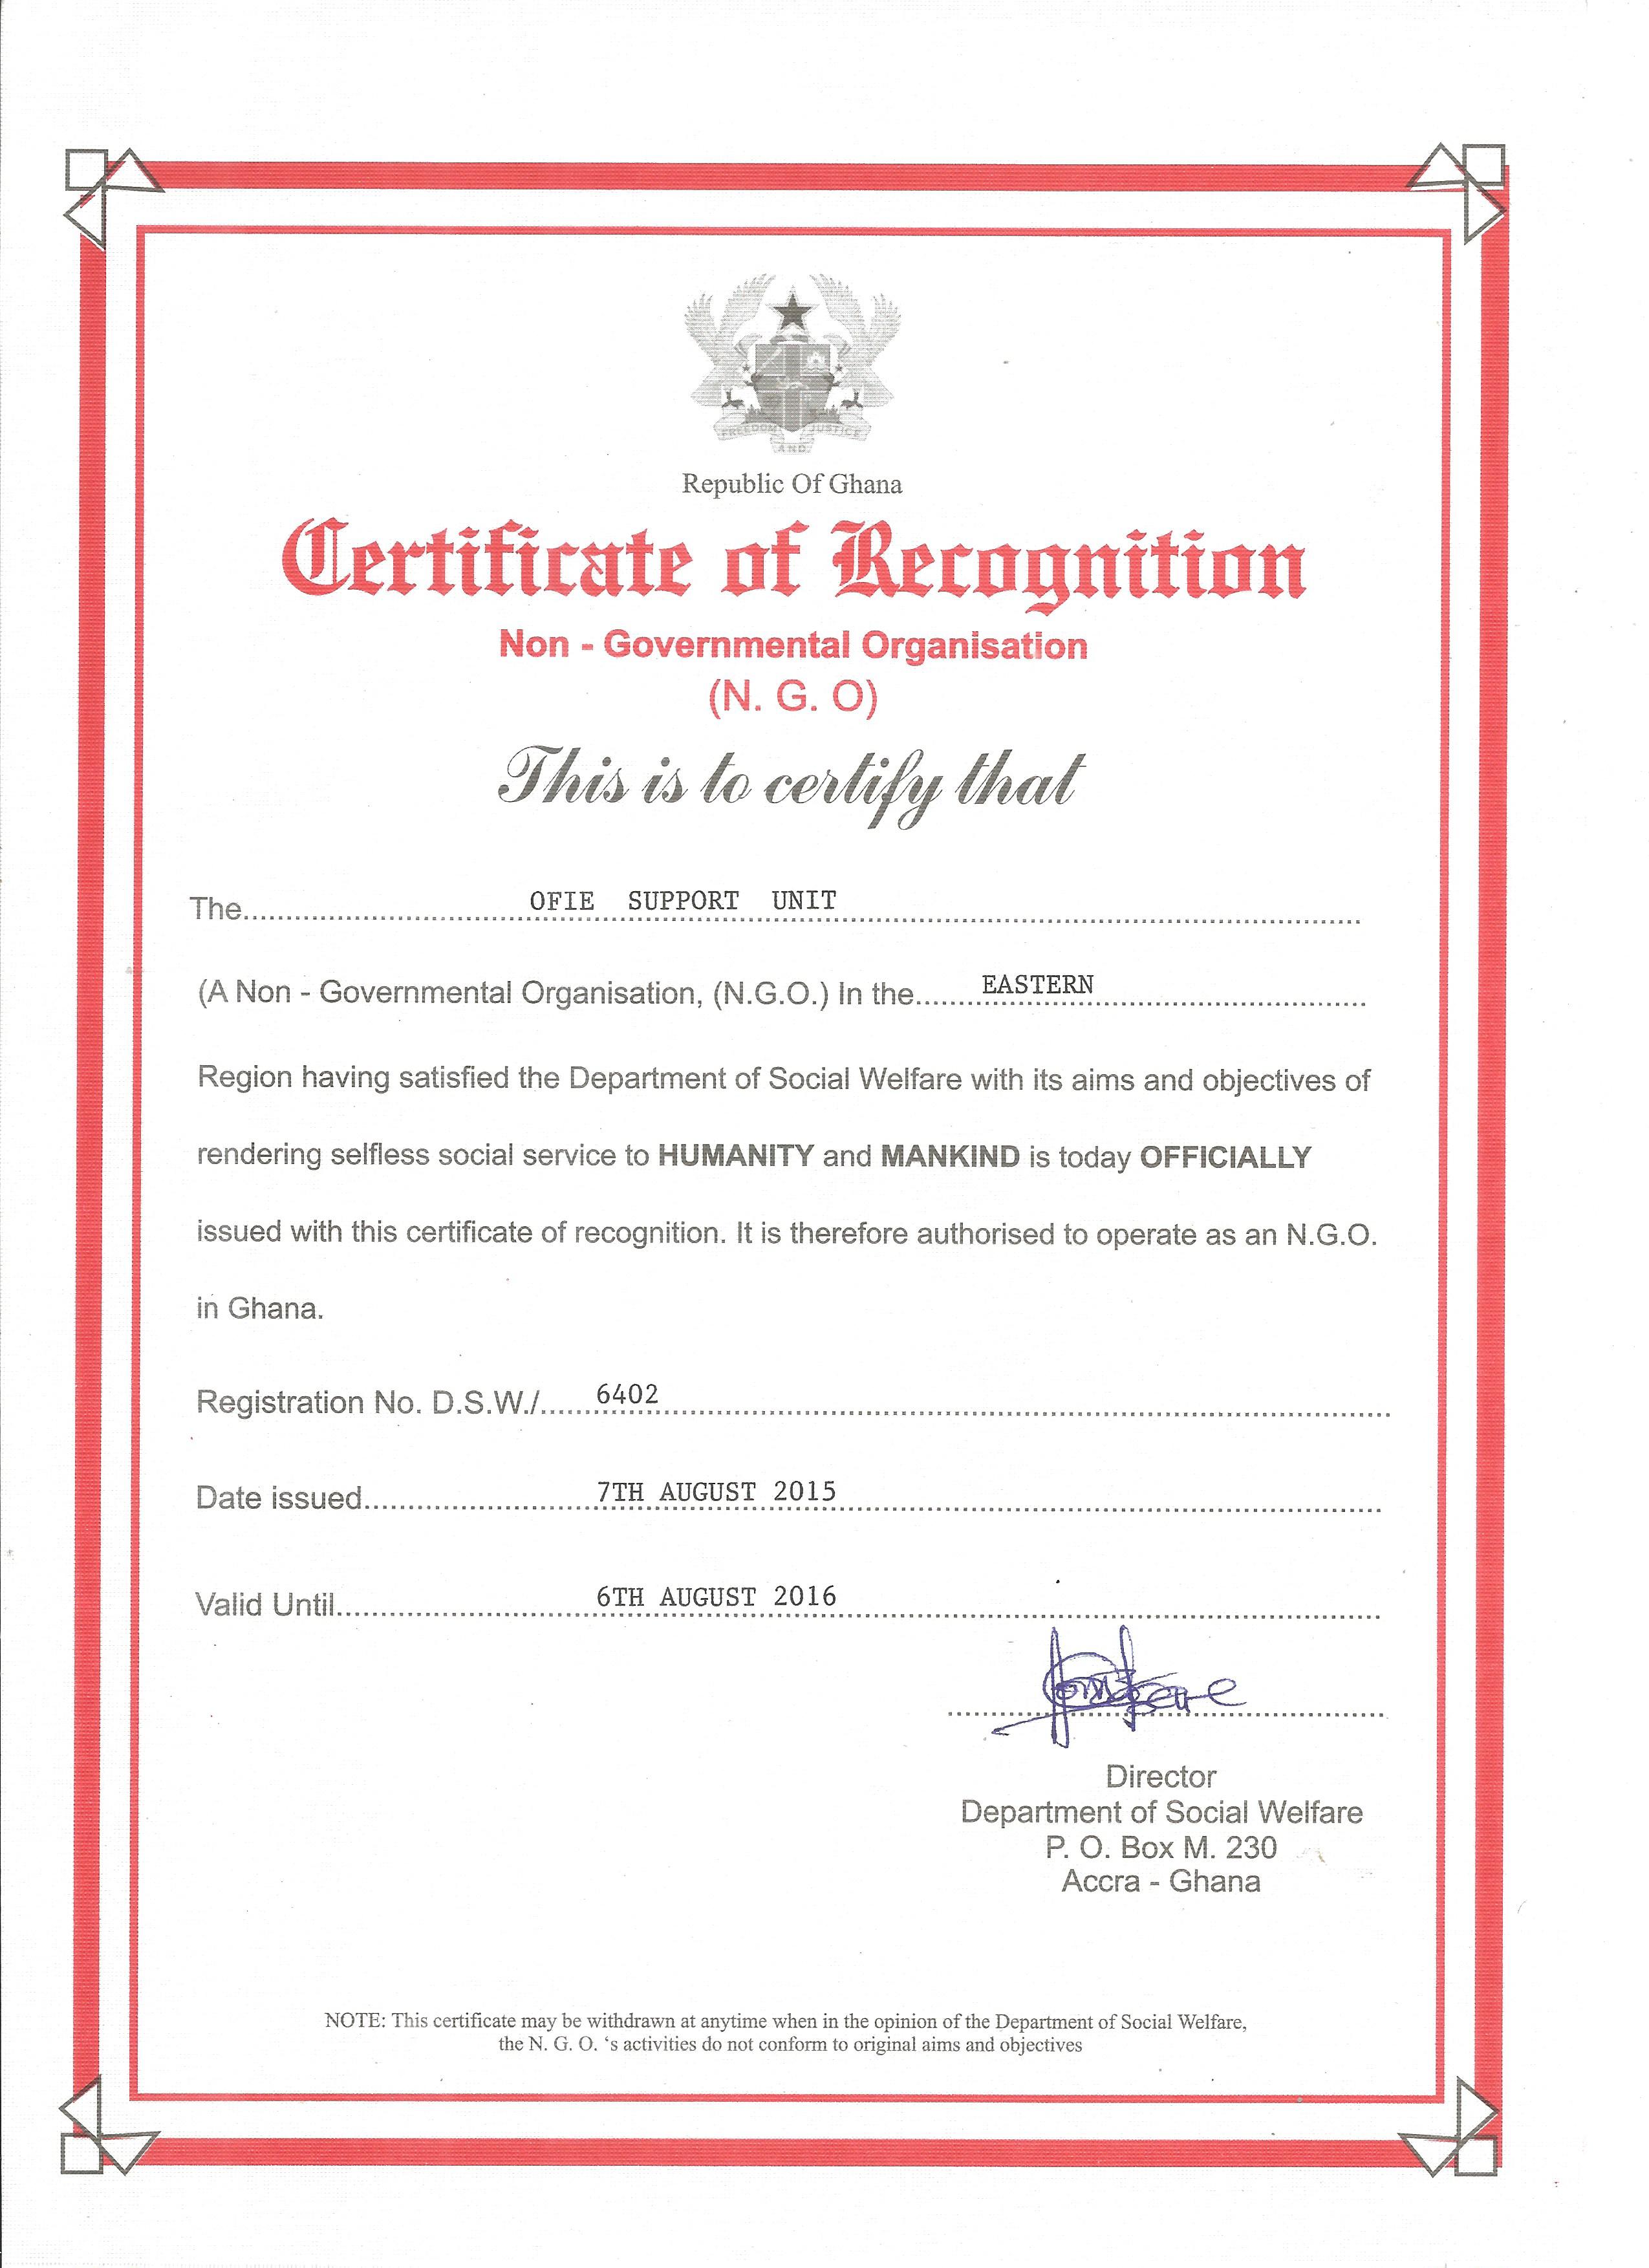 Registration No. D.S.W./ 6402 (Department of Social Welfare – Republic of Ghana) 2015/16